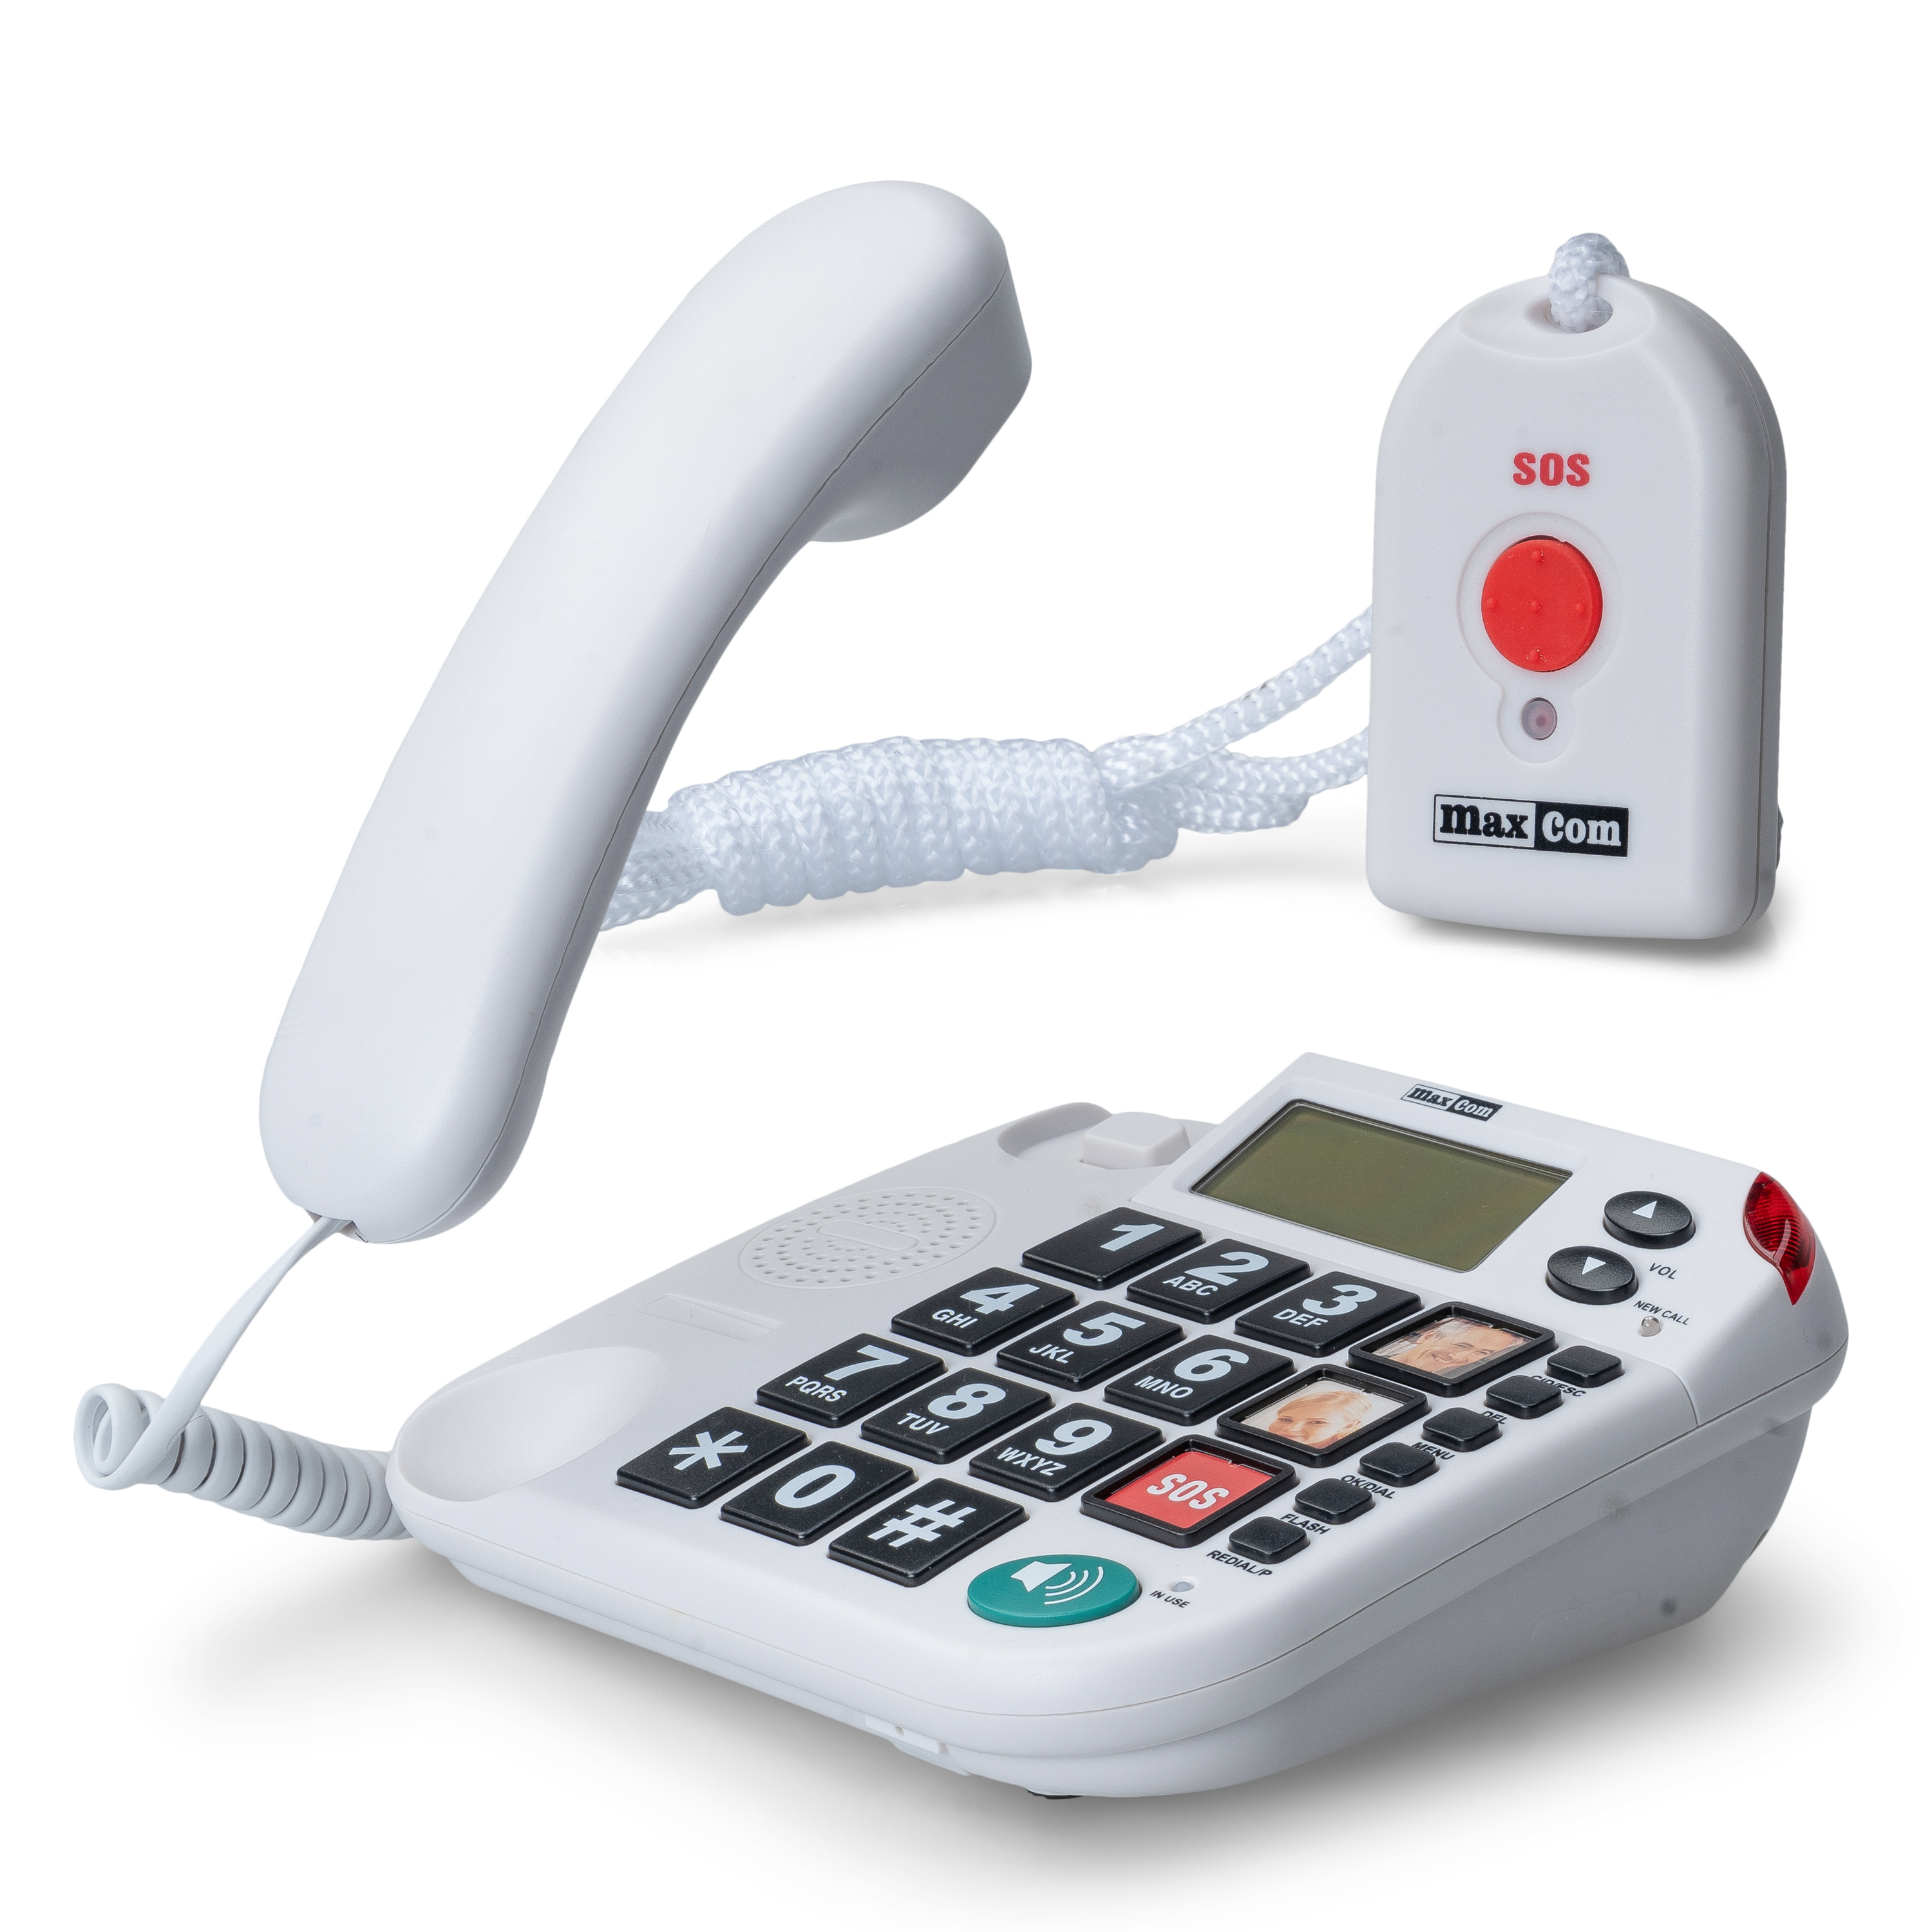 MAXCOM KXTSOS 481 Seniorentelefon mit Notruf-Umhängesender